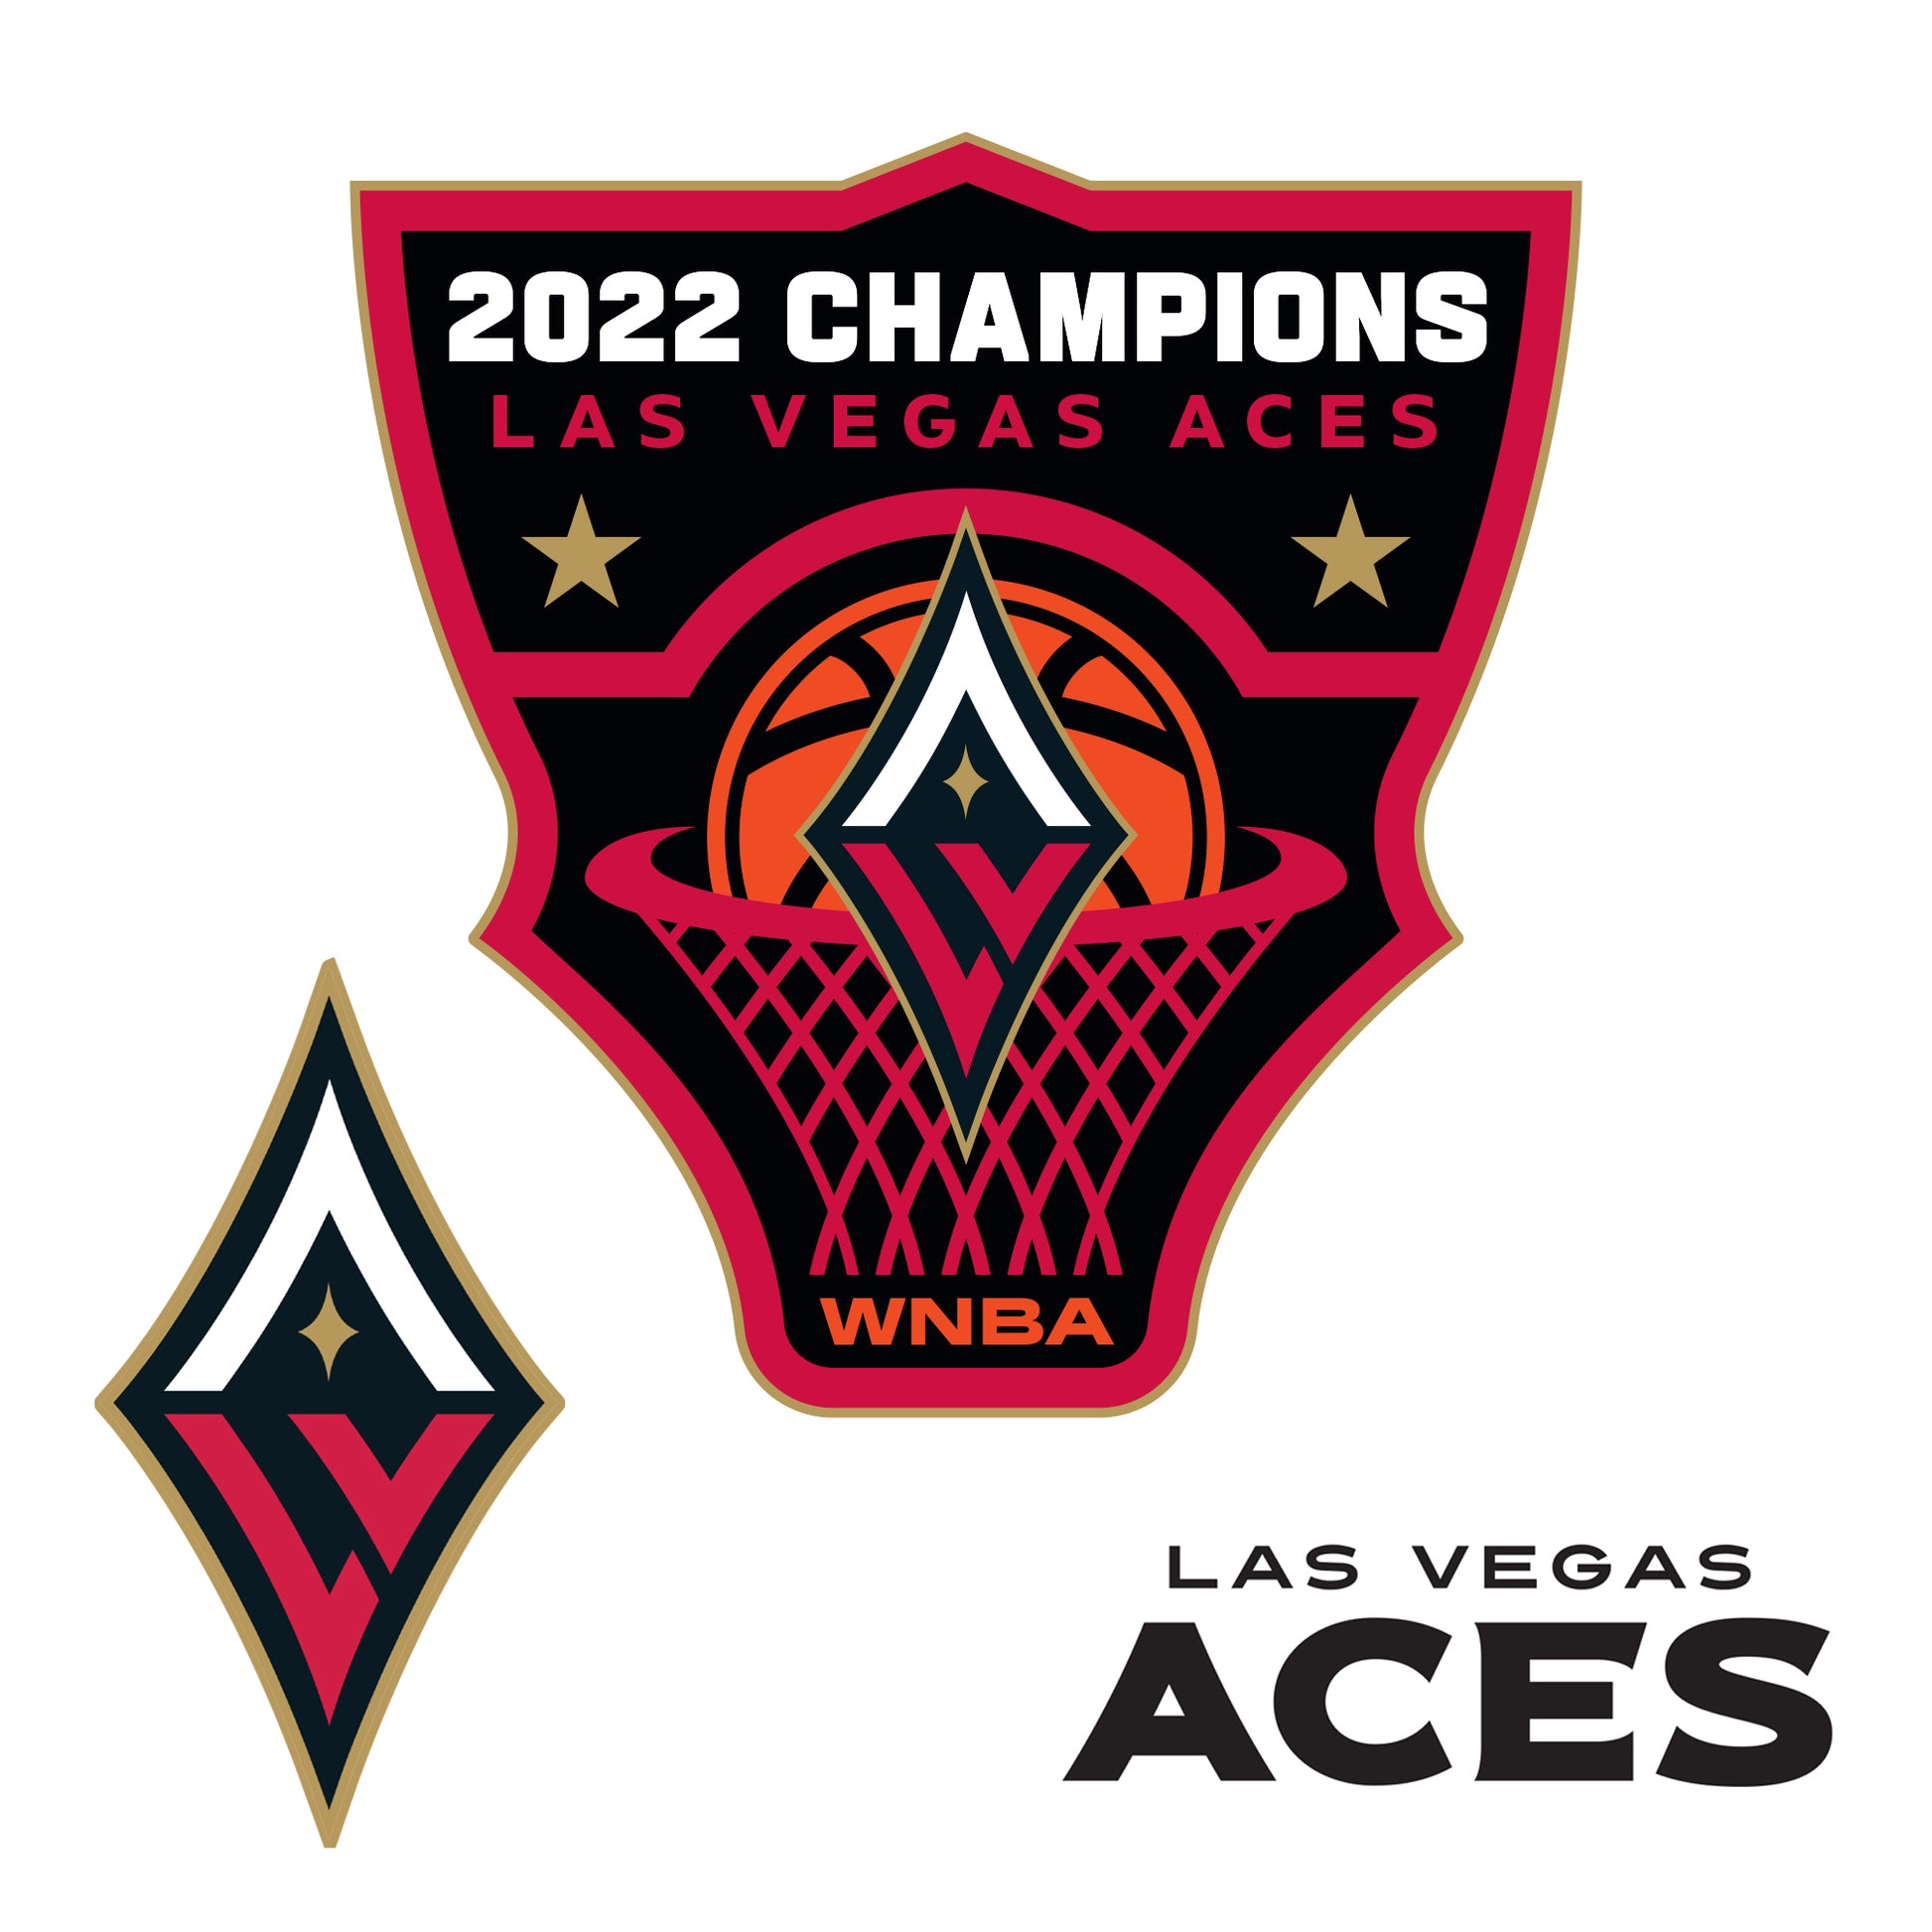 Las Vegas Aces on X:  / X